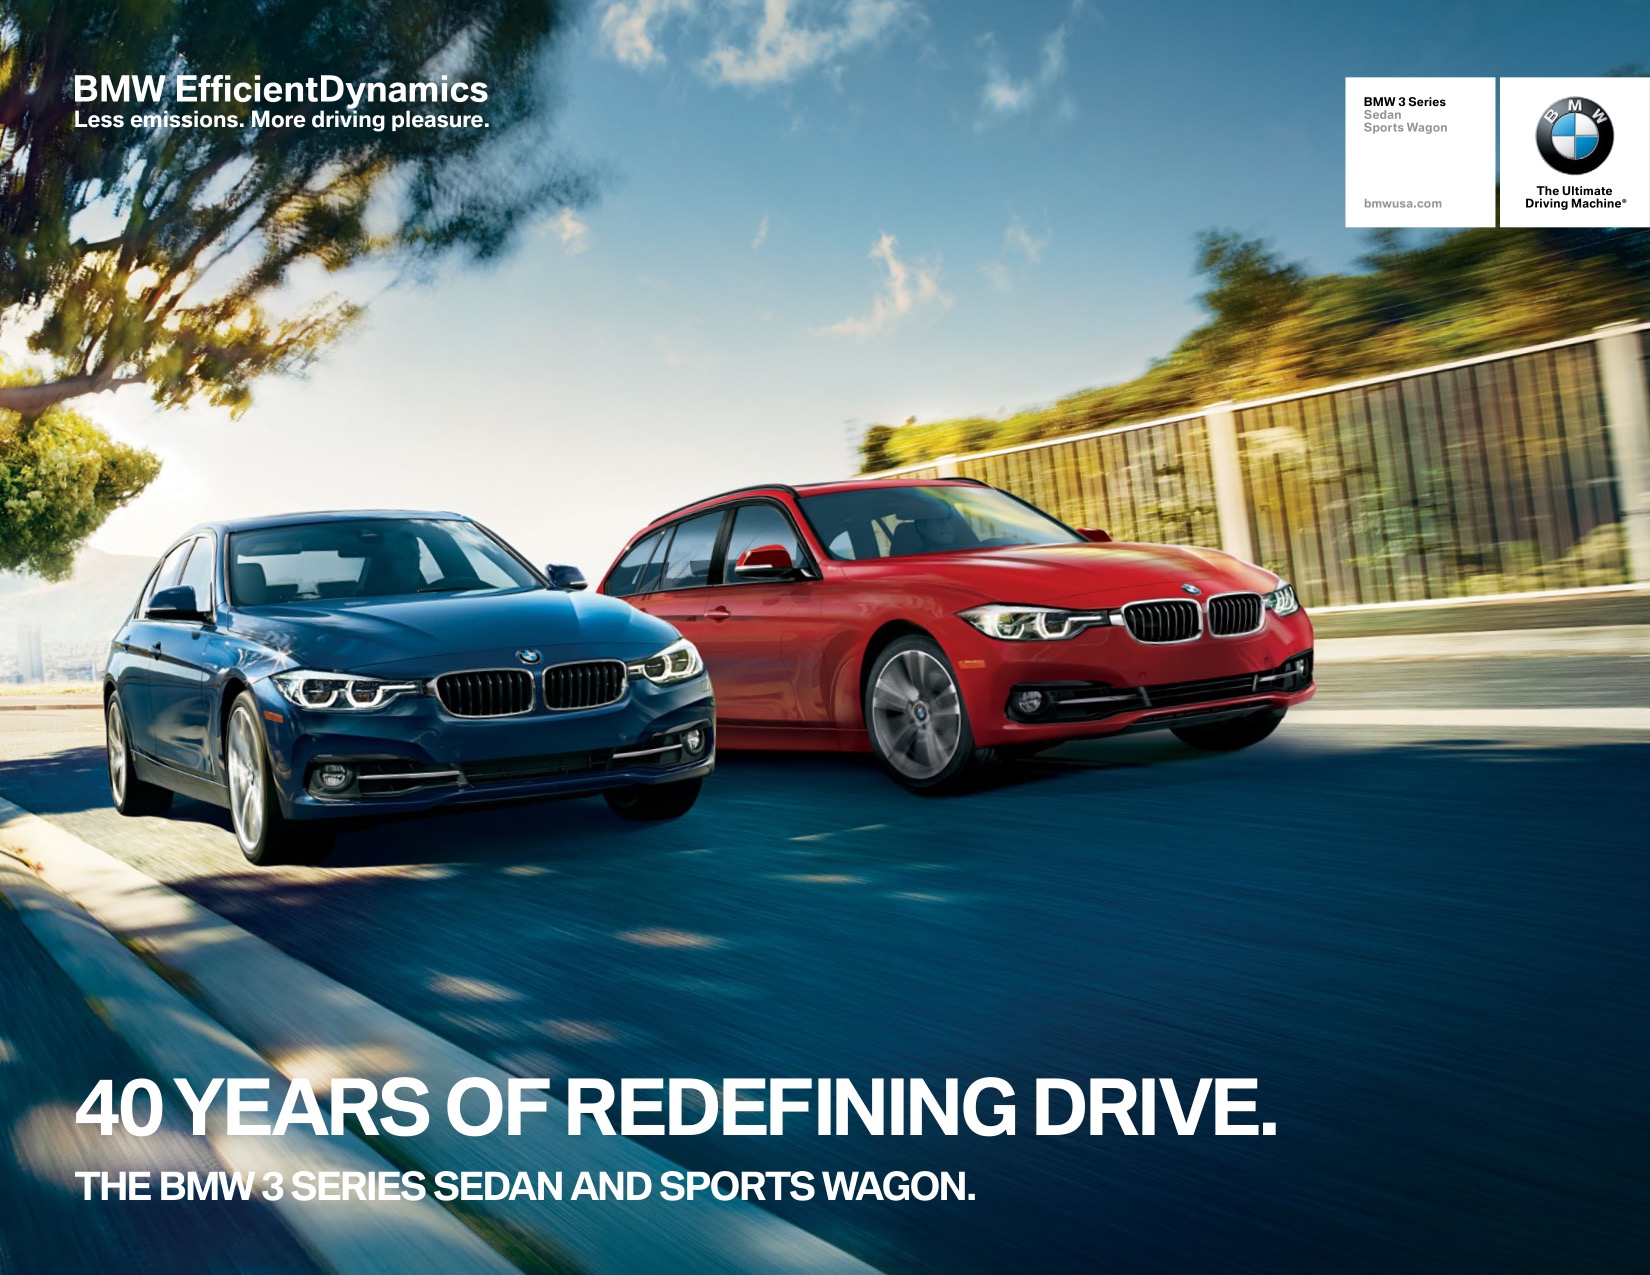 2016 BMW 3-Series Wagon Brochure